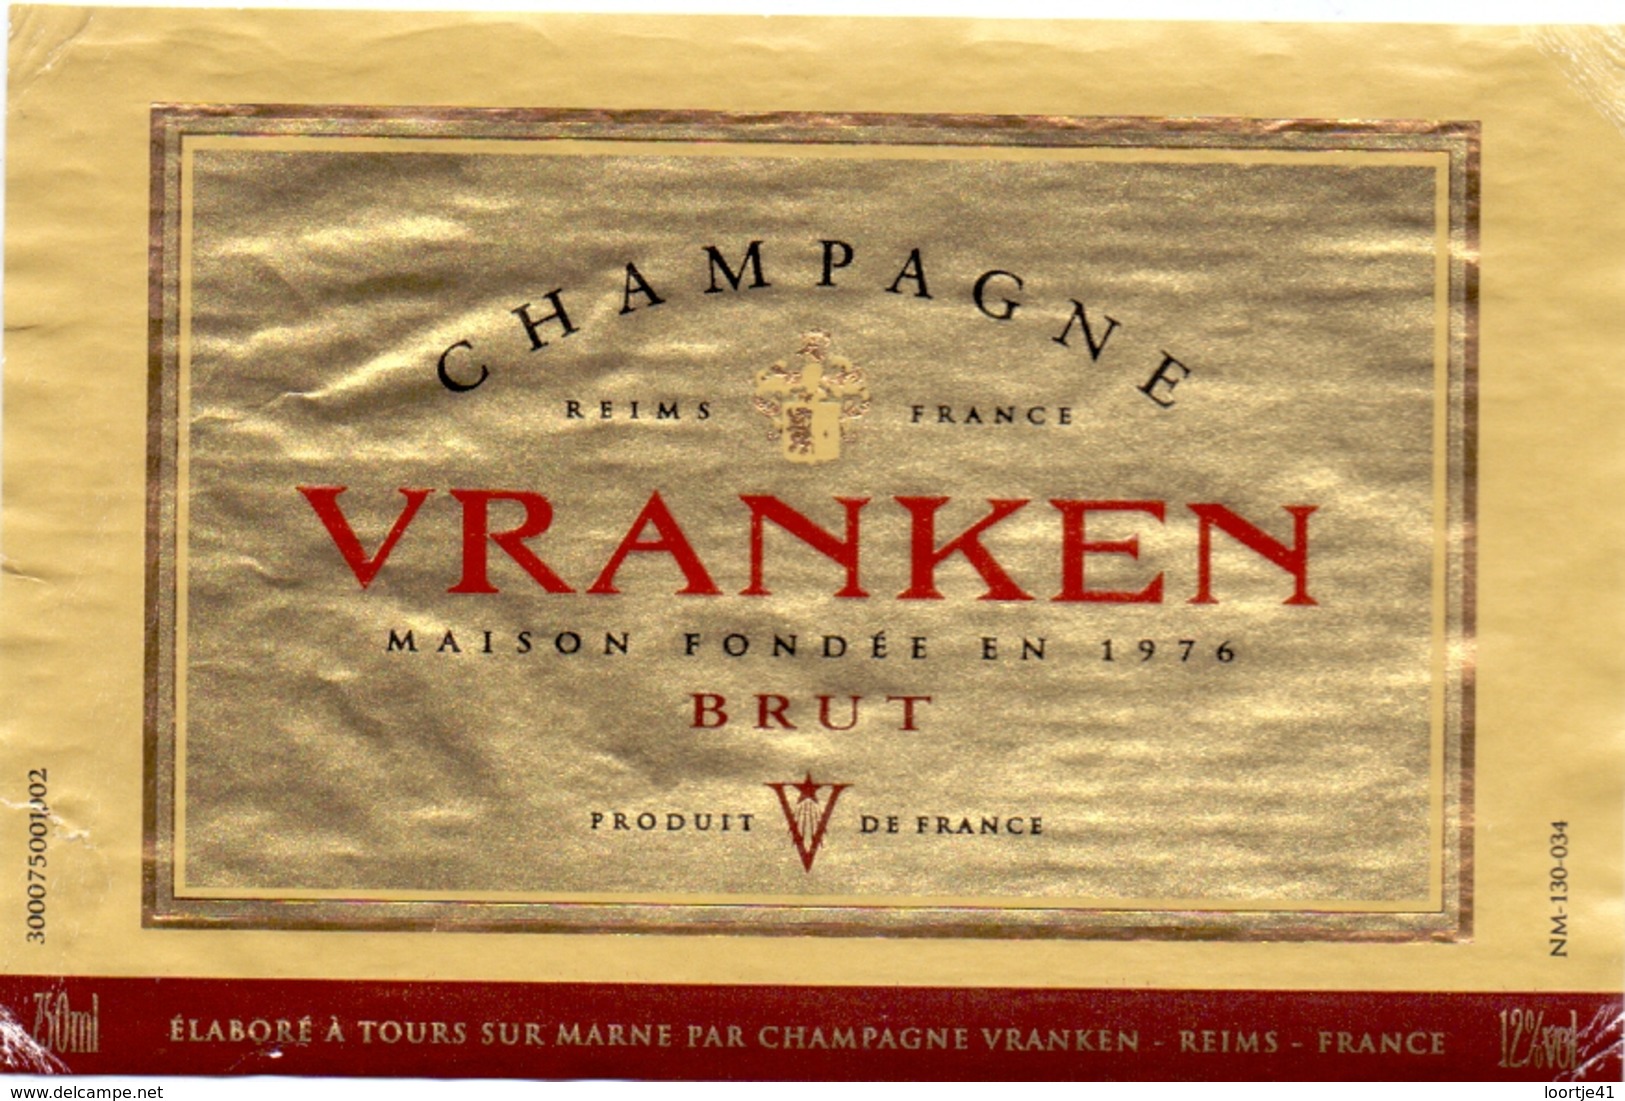 Label sampanye Vranken yang sudah tua